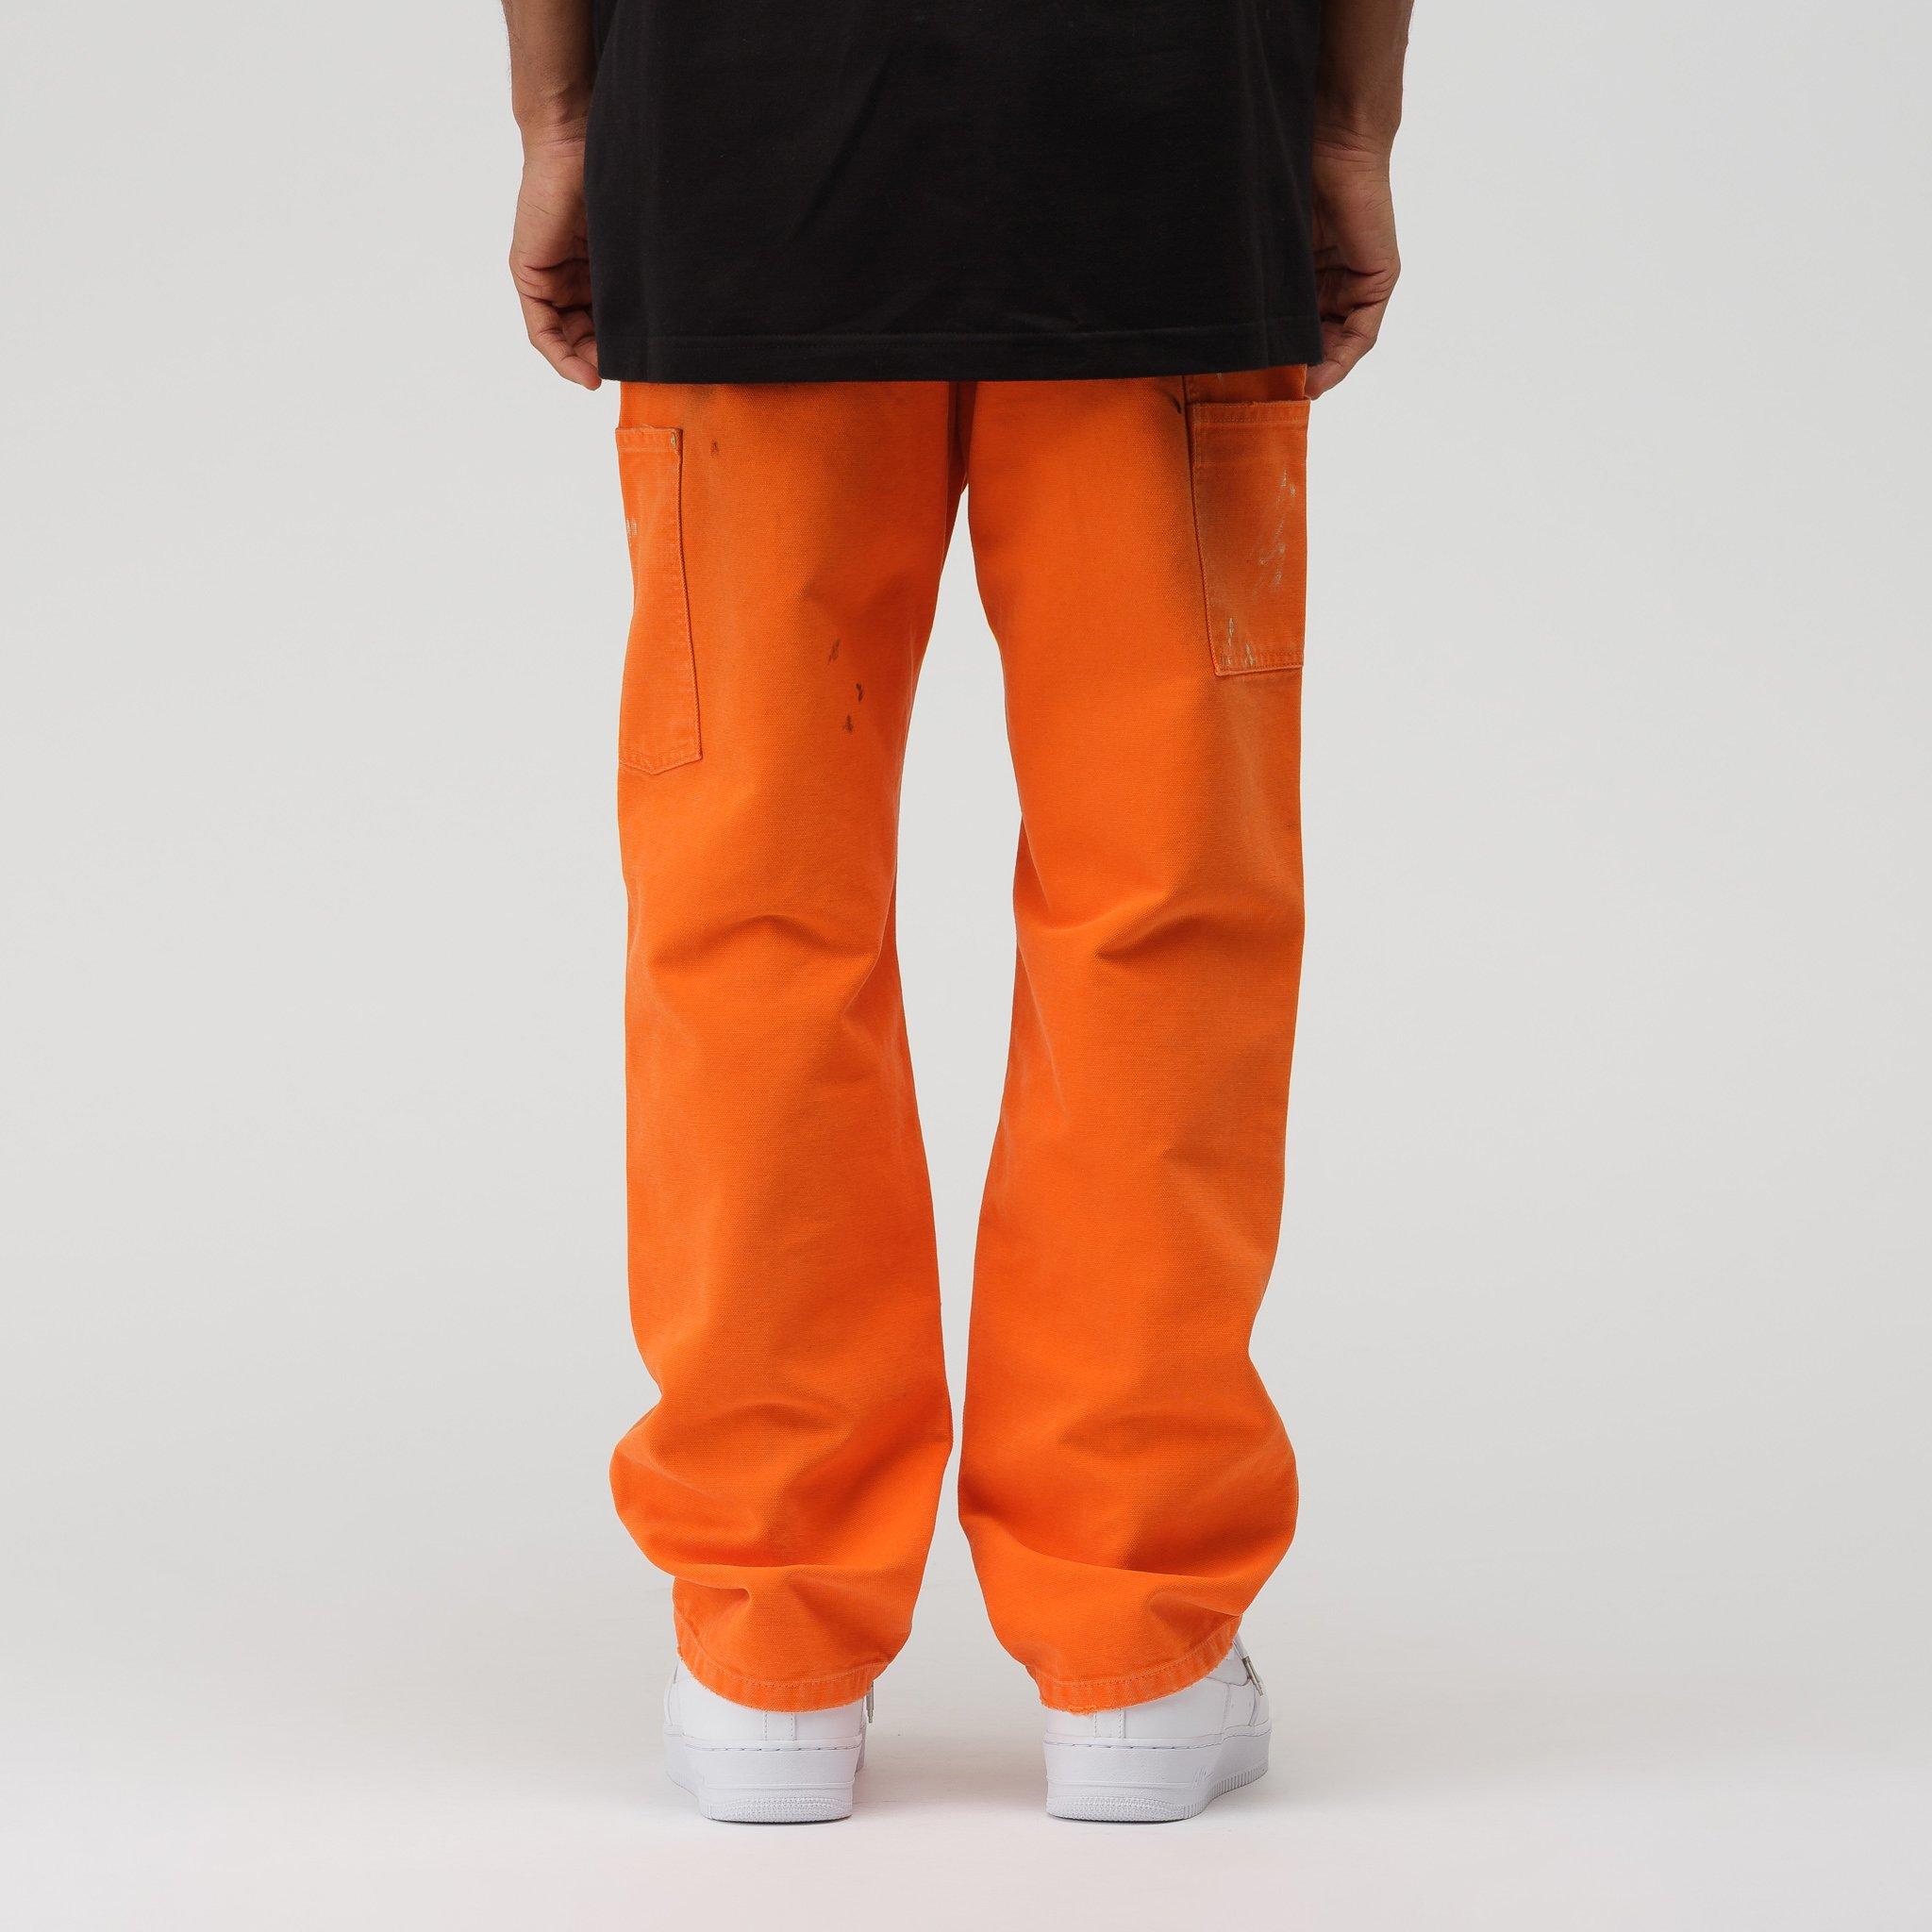 Heron Preston Cotton X Carhartt Pants In Orange Crystal for Men - Lyst